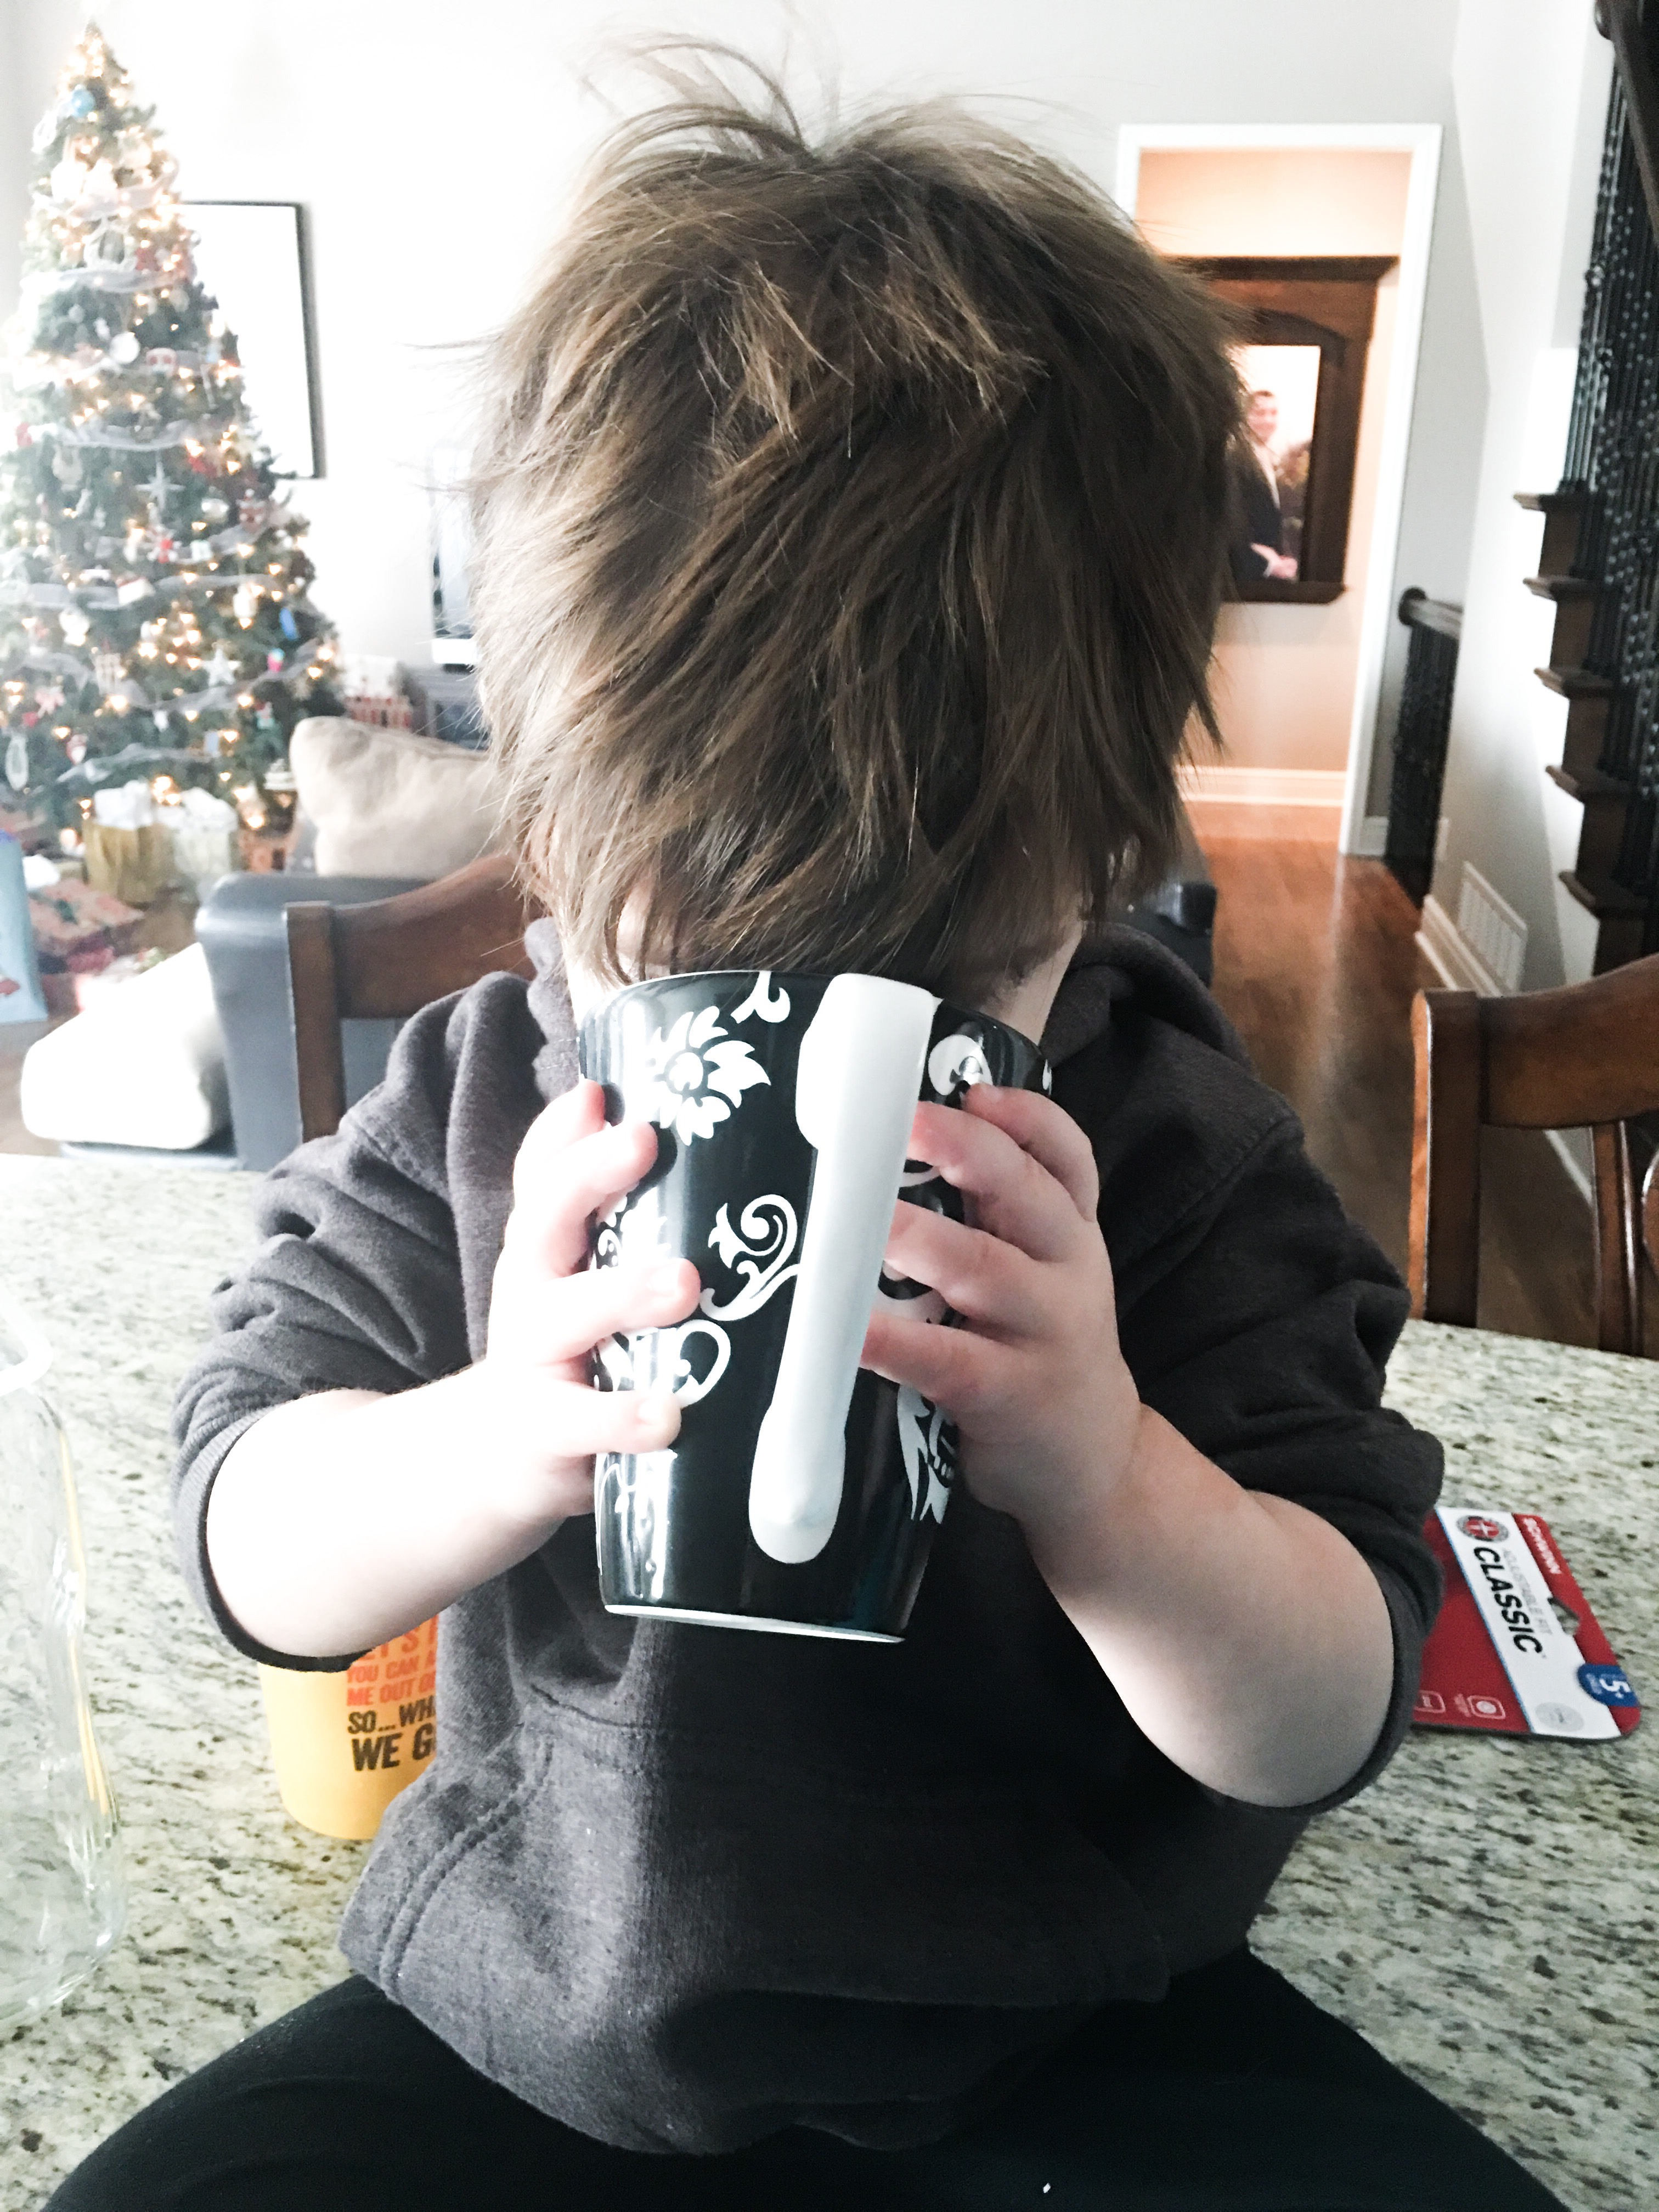 Toddler Boy Drinking Hot Chocolate